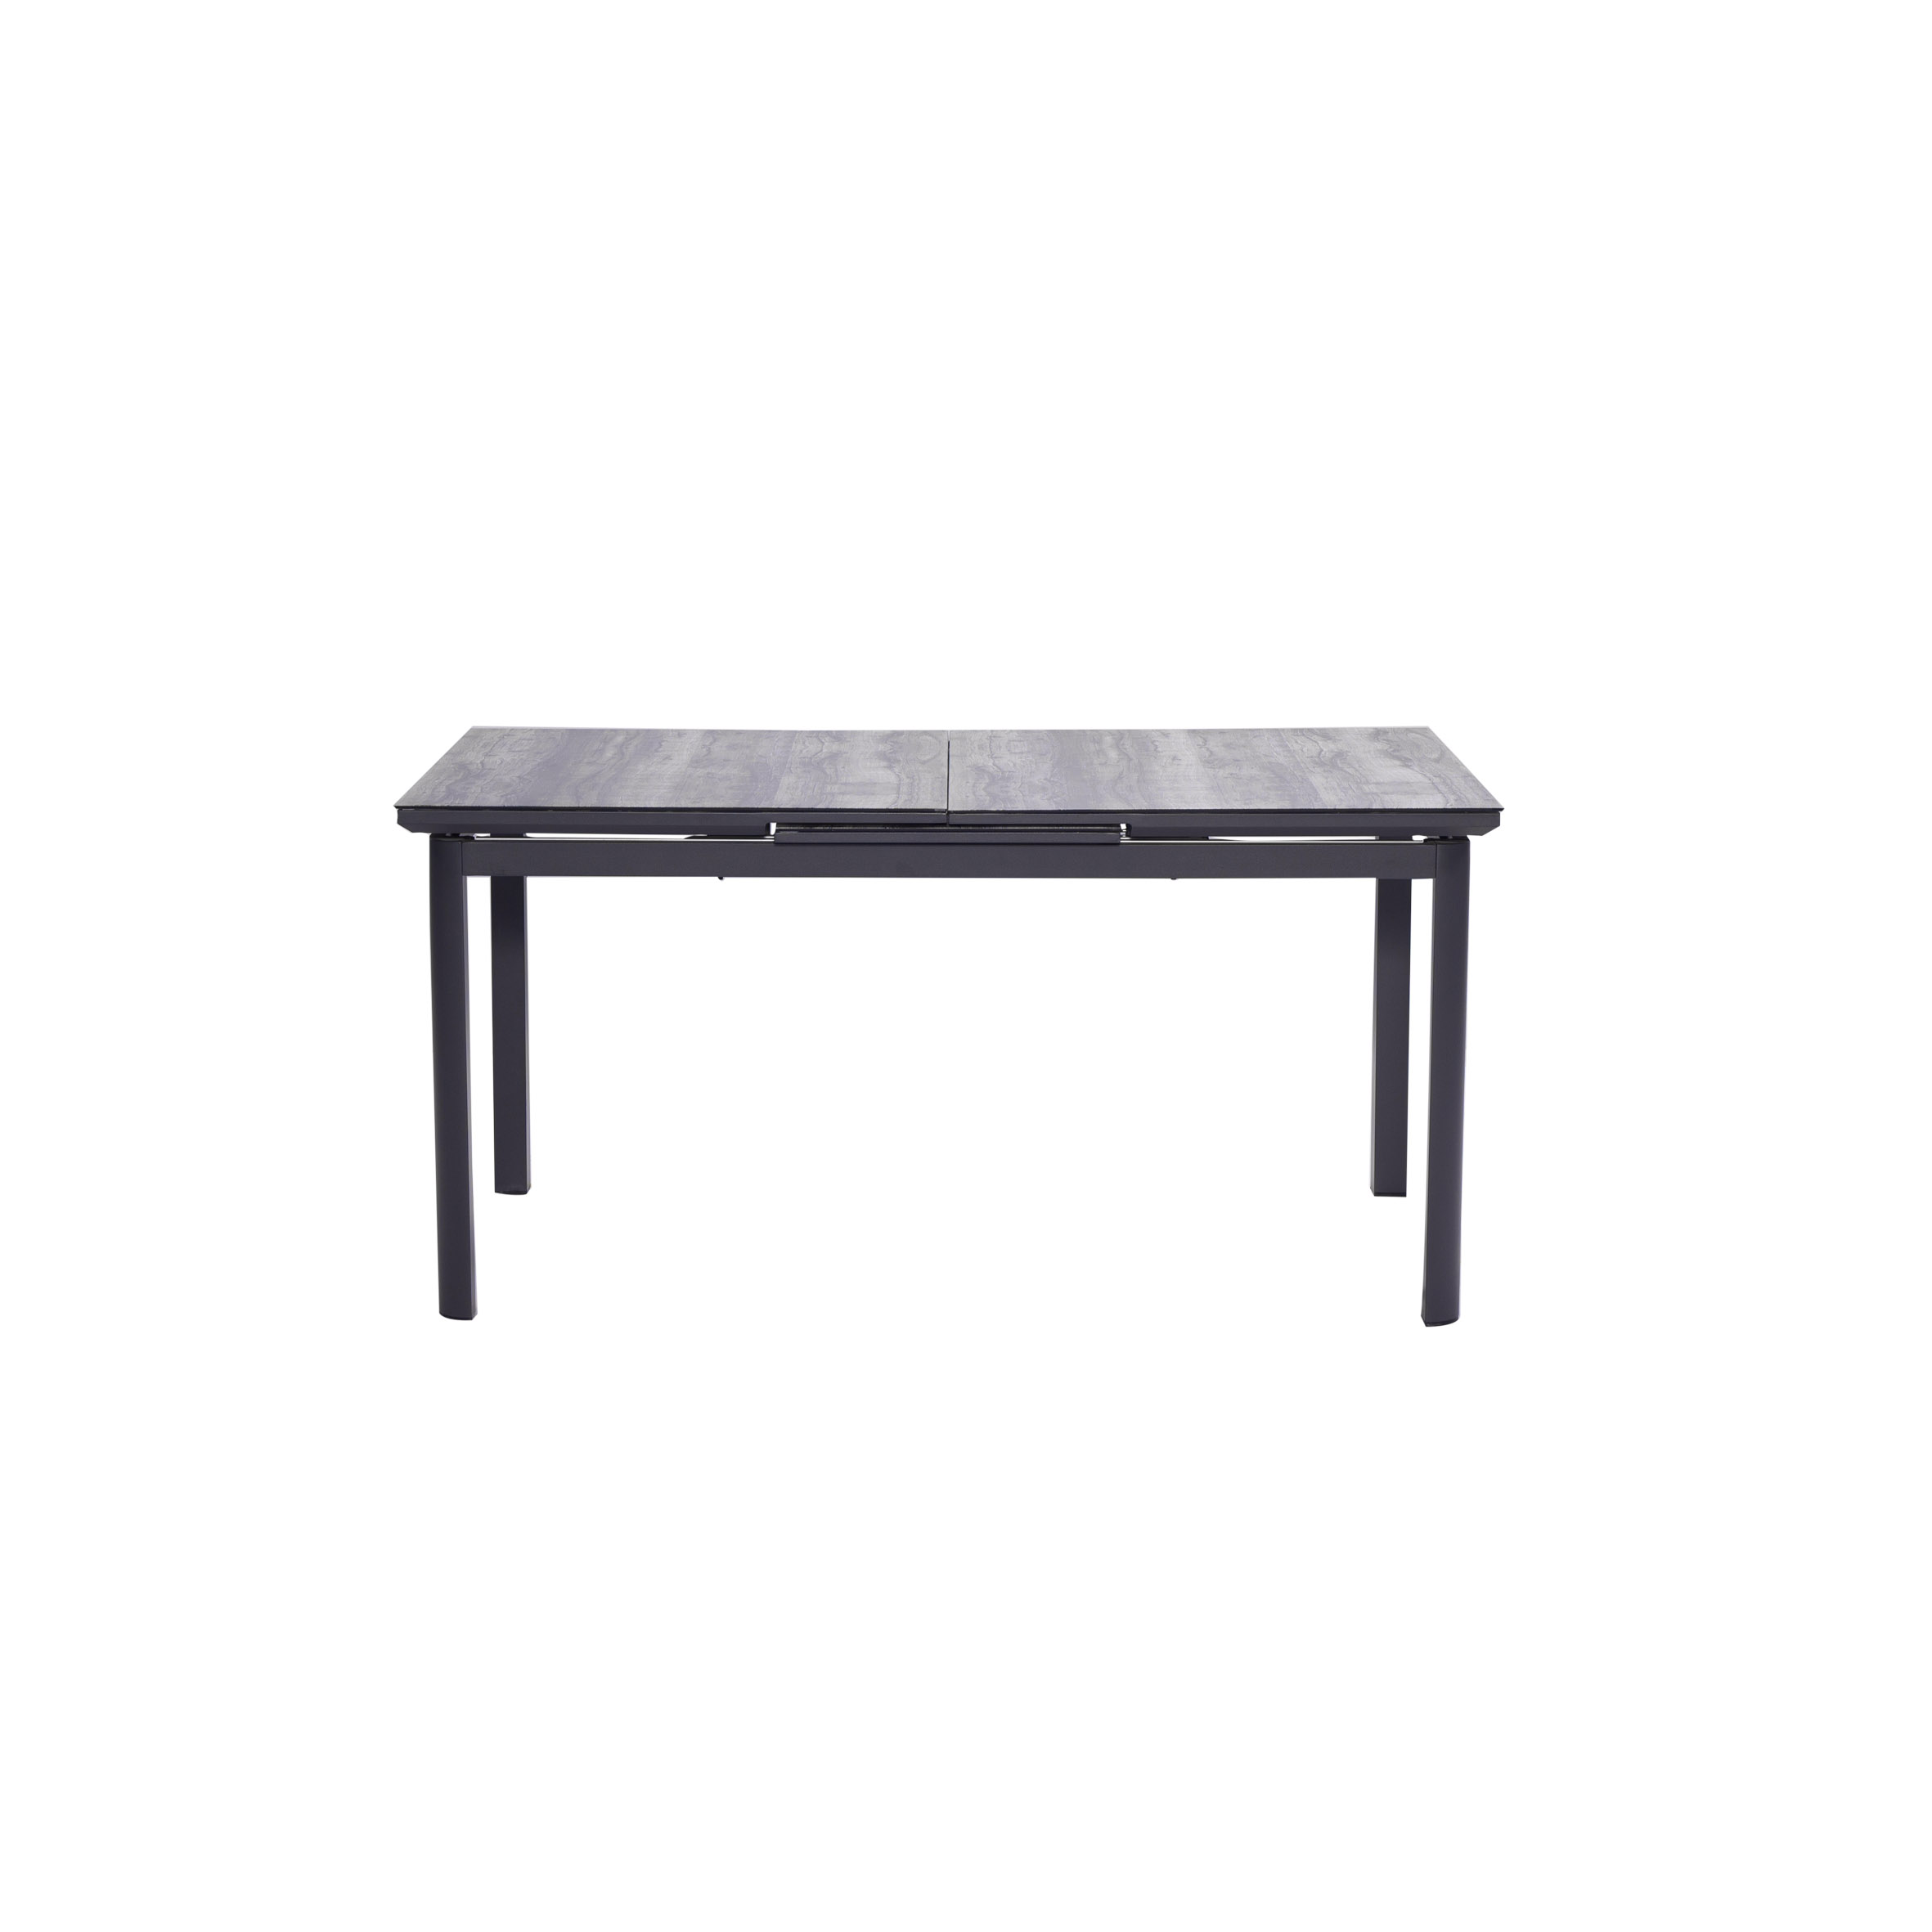 Santo extension table (Ceramic glass) S3